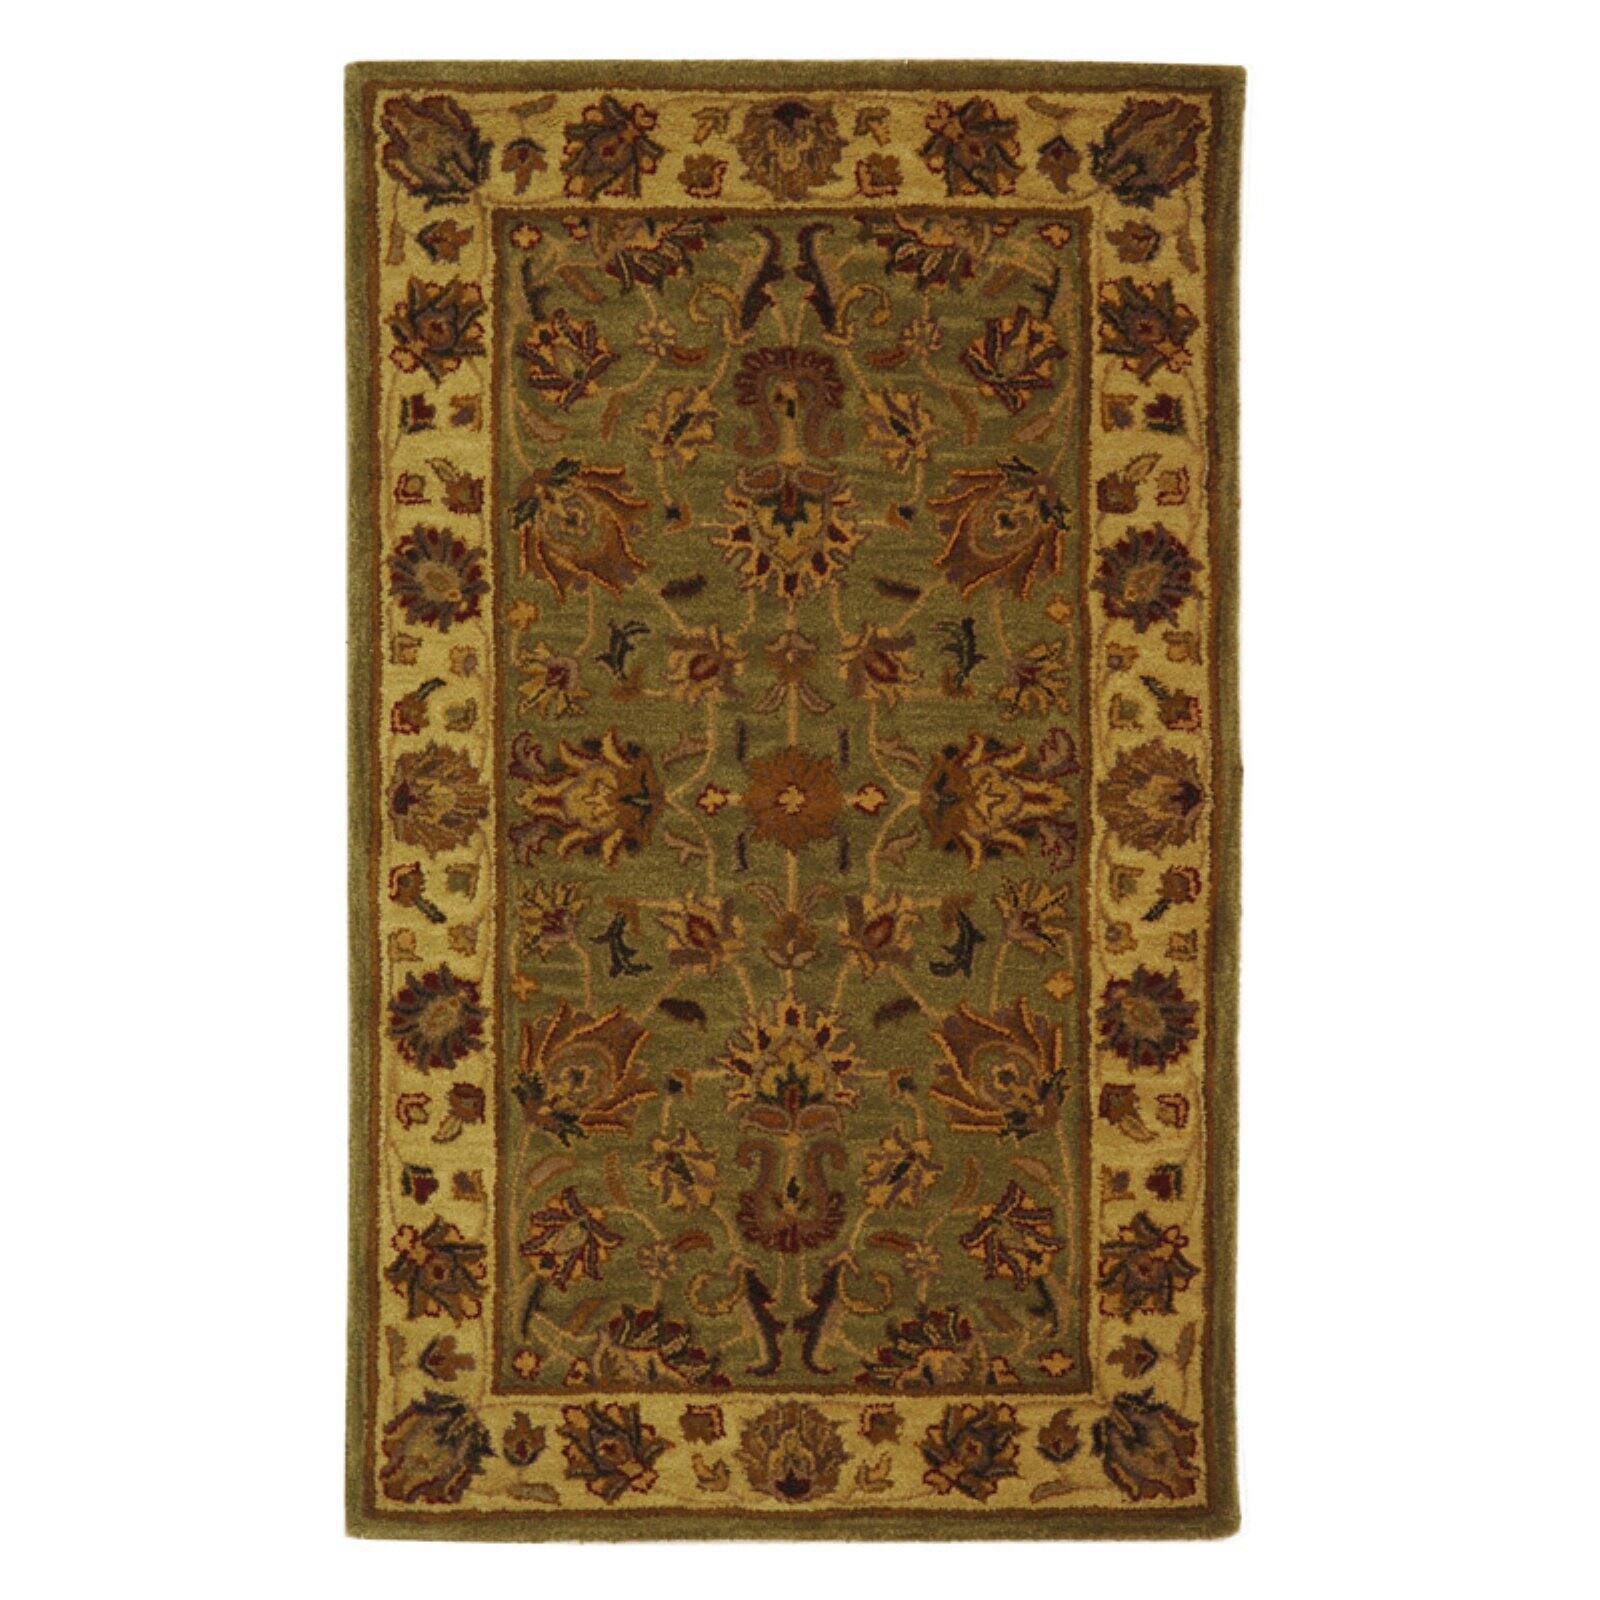 SAFAVIEH Heritage Regis Traditional Wool Area Rug, Green/Gold, 5' x 8' - image 4 of 10